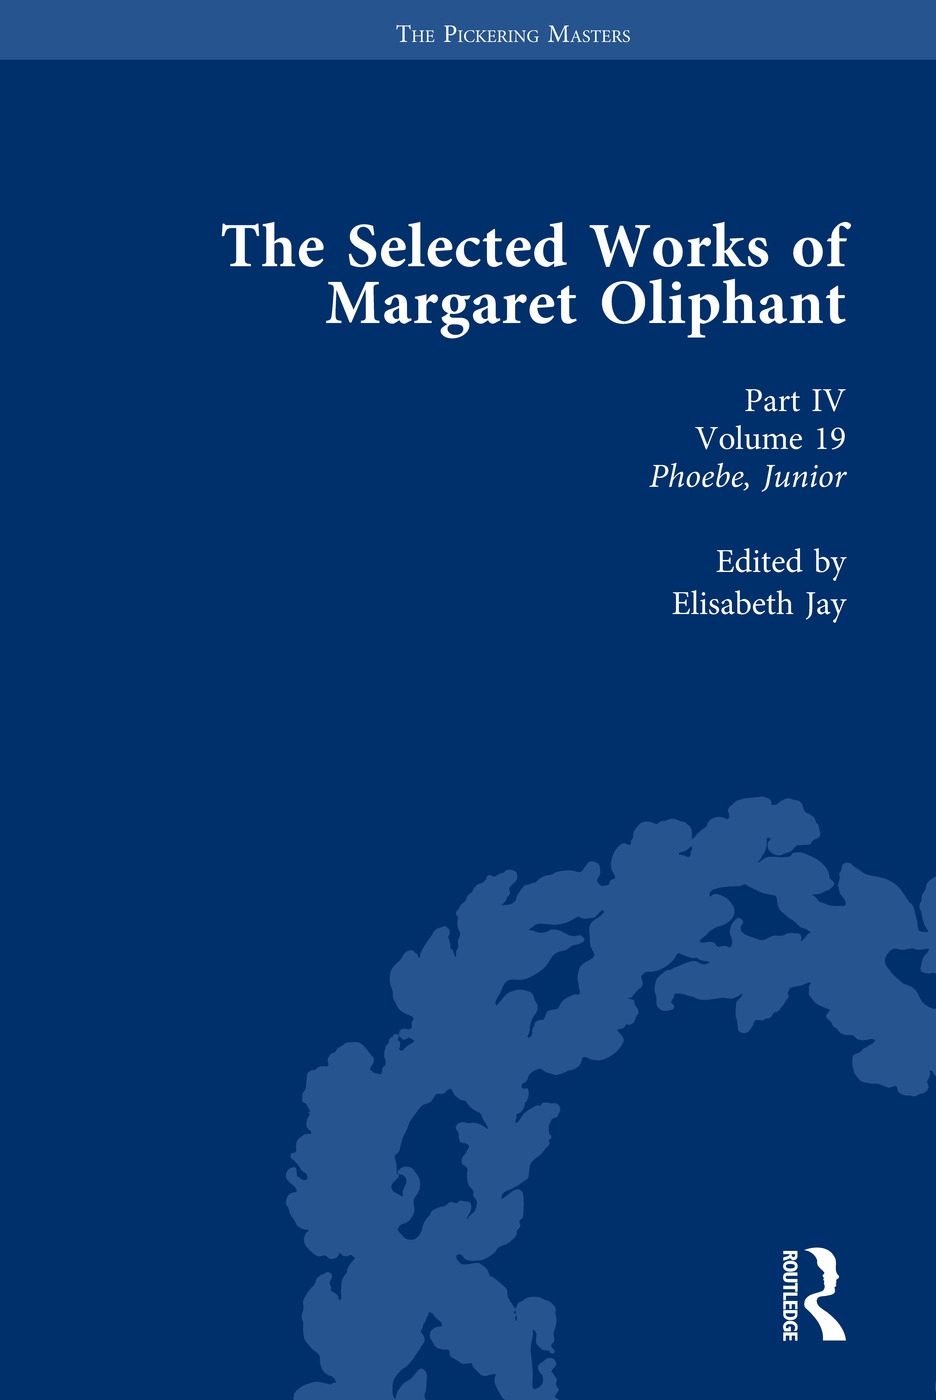 The Selected Works of Margaret Oliphant, Part IV Volume 19: Phoebe, Junior